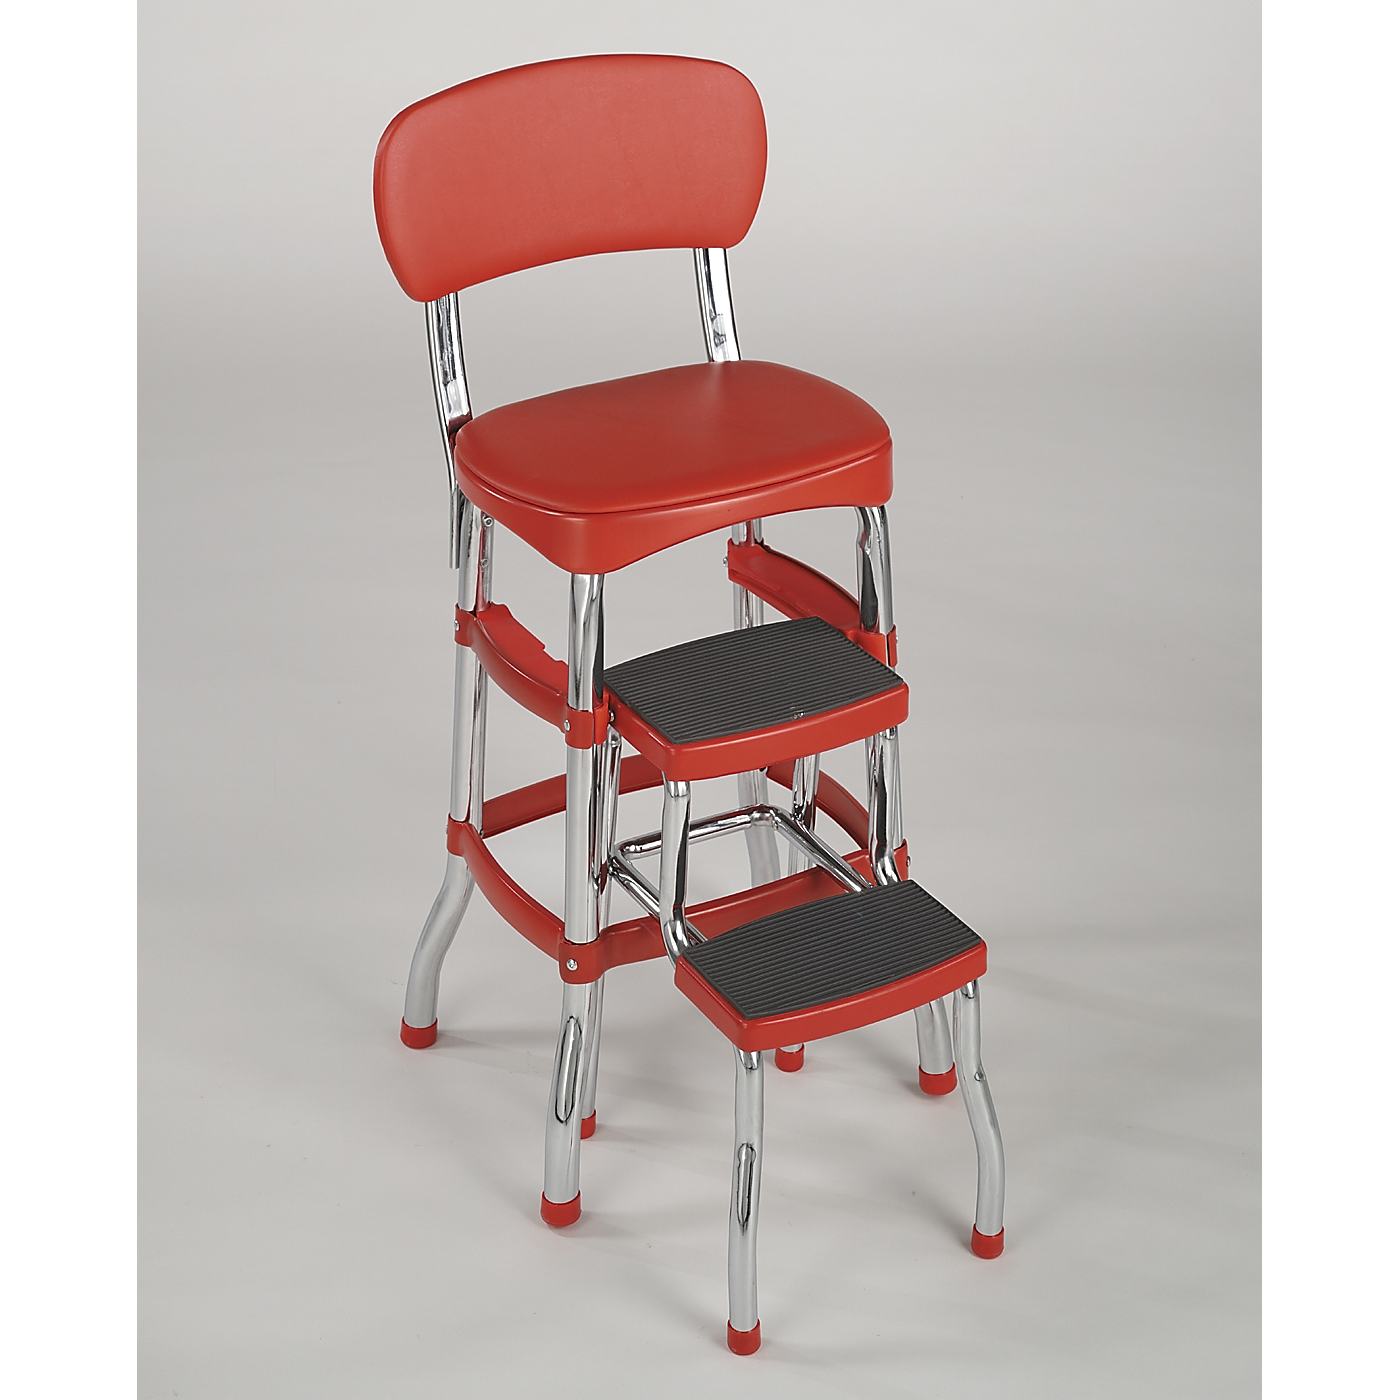 step stool chair